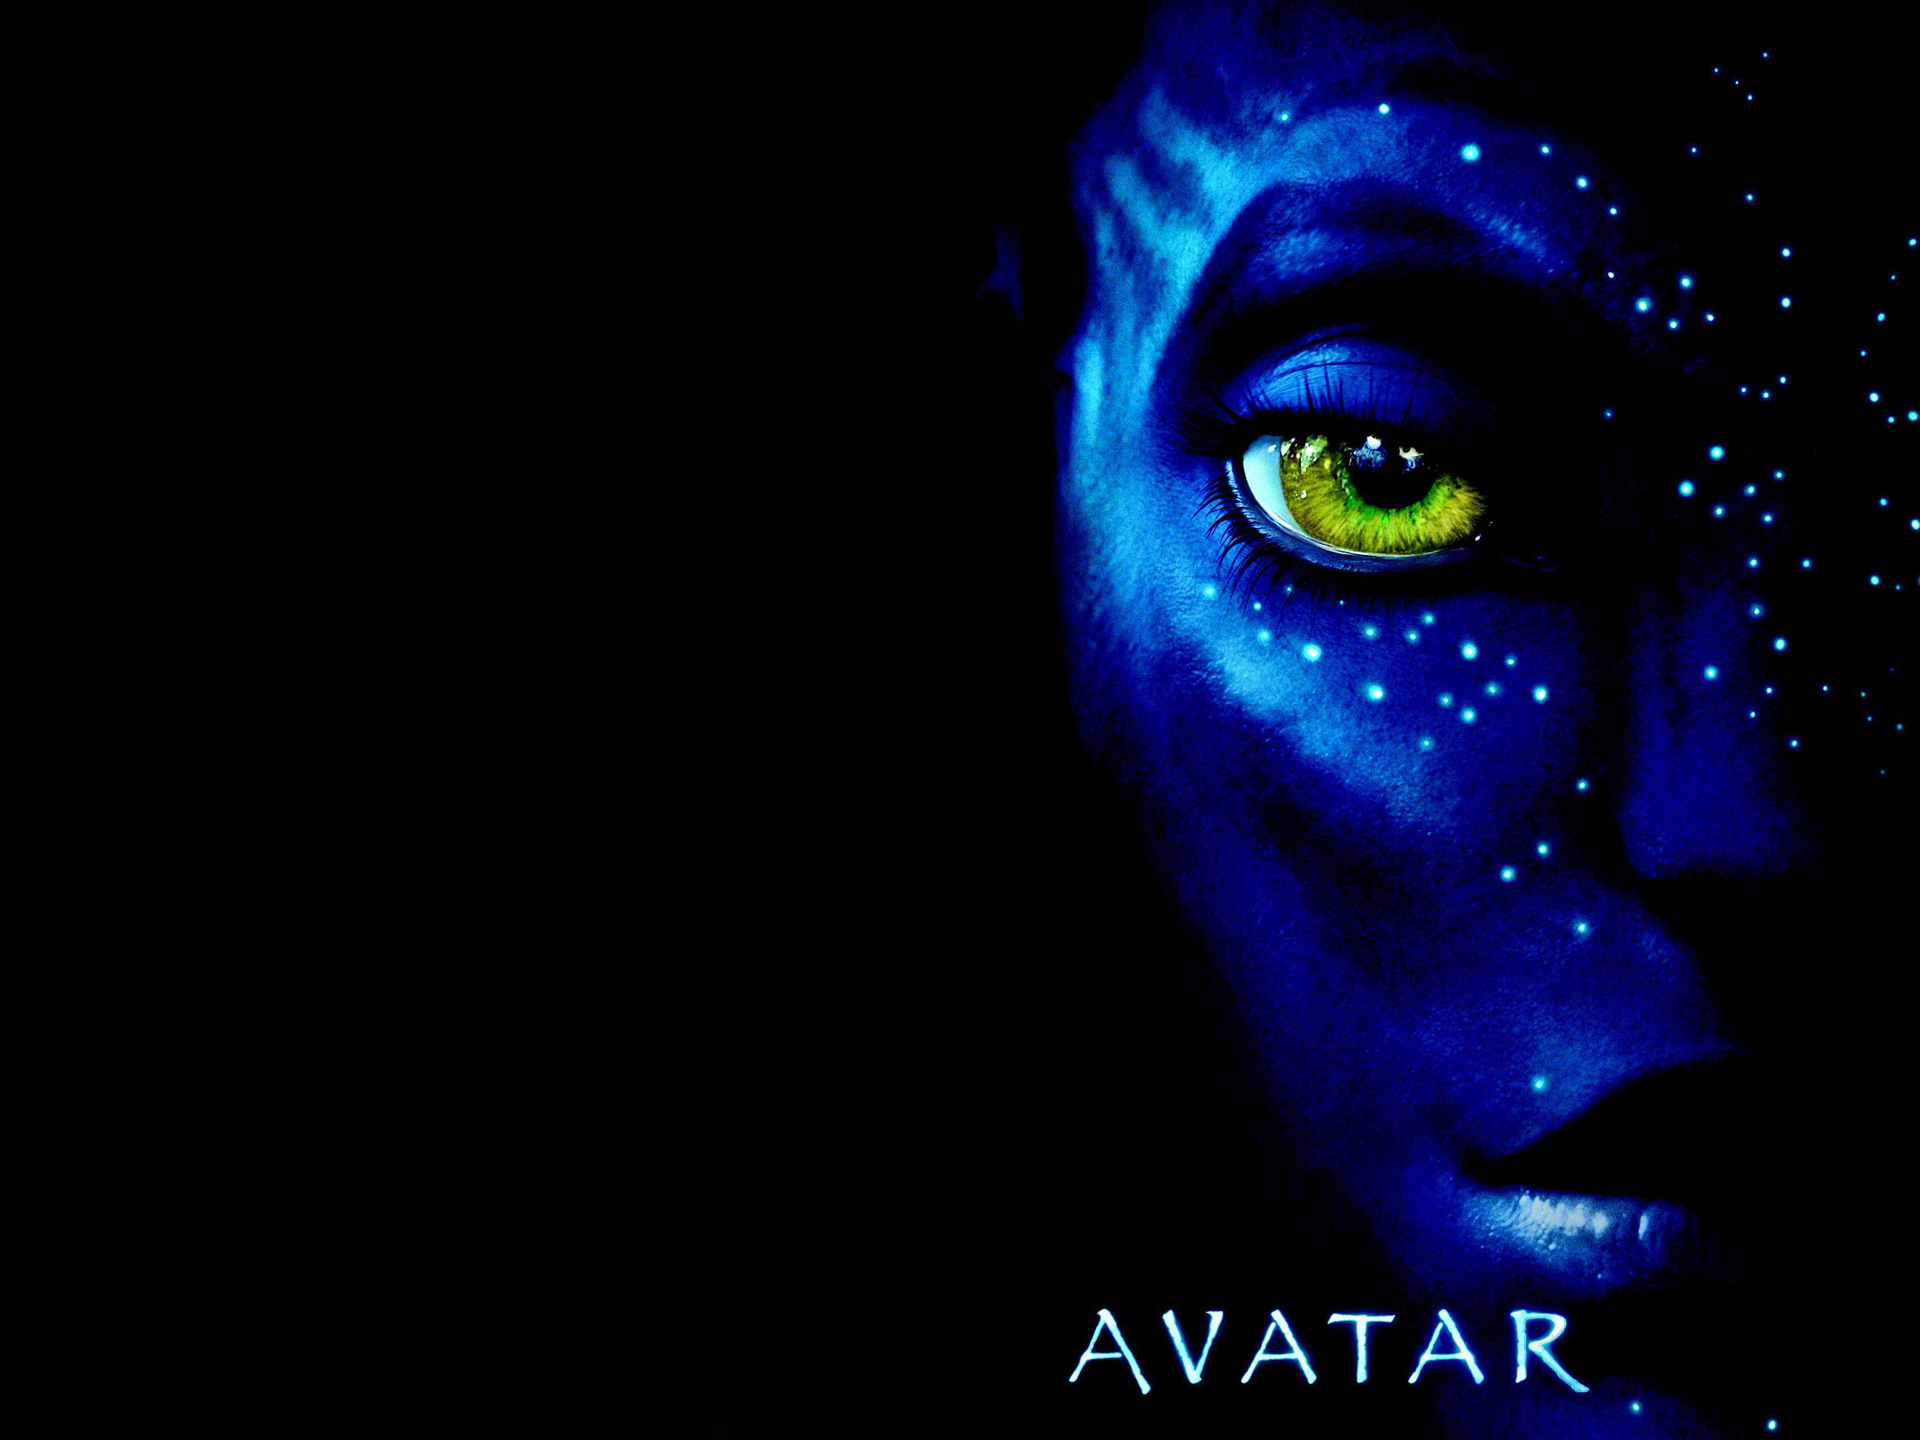 Official Avatar Movie Poster HD Wallpaper Free HD Wallpaper